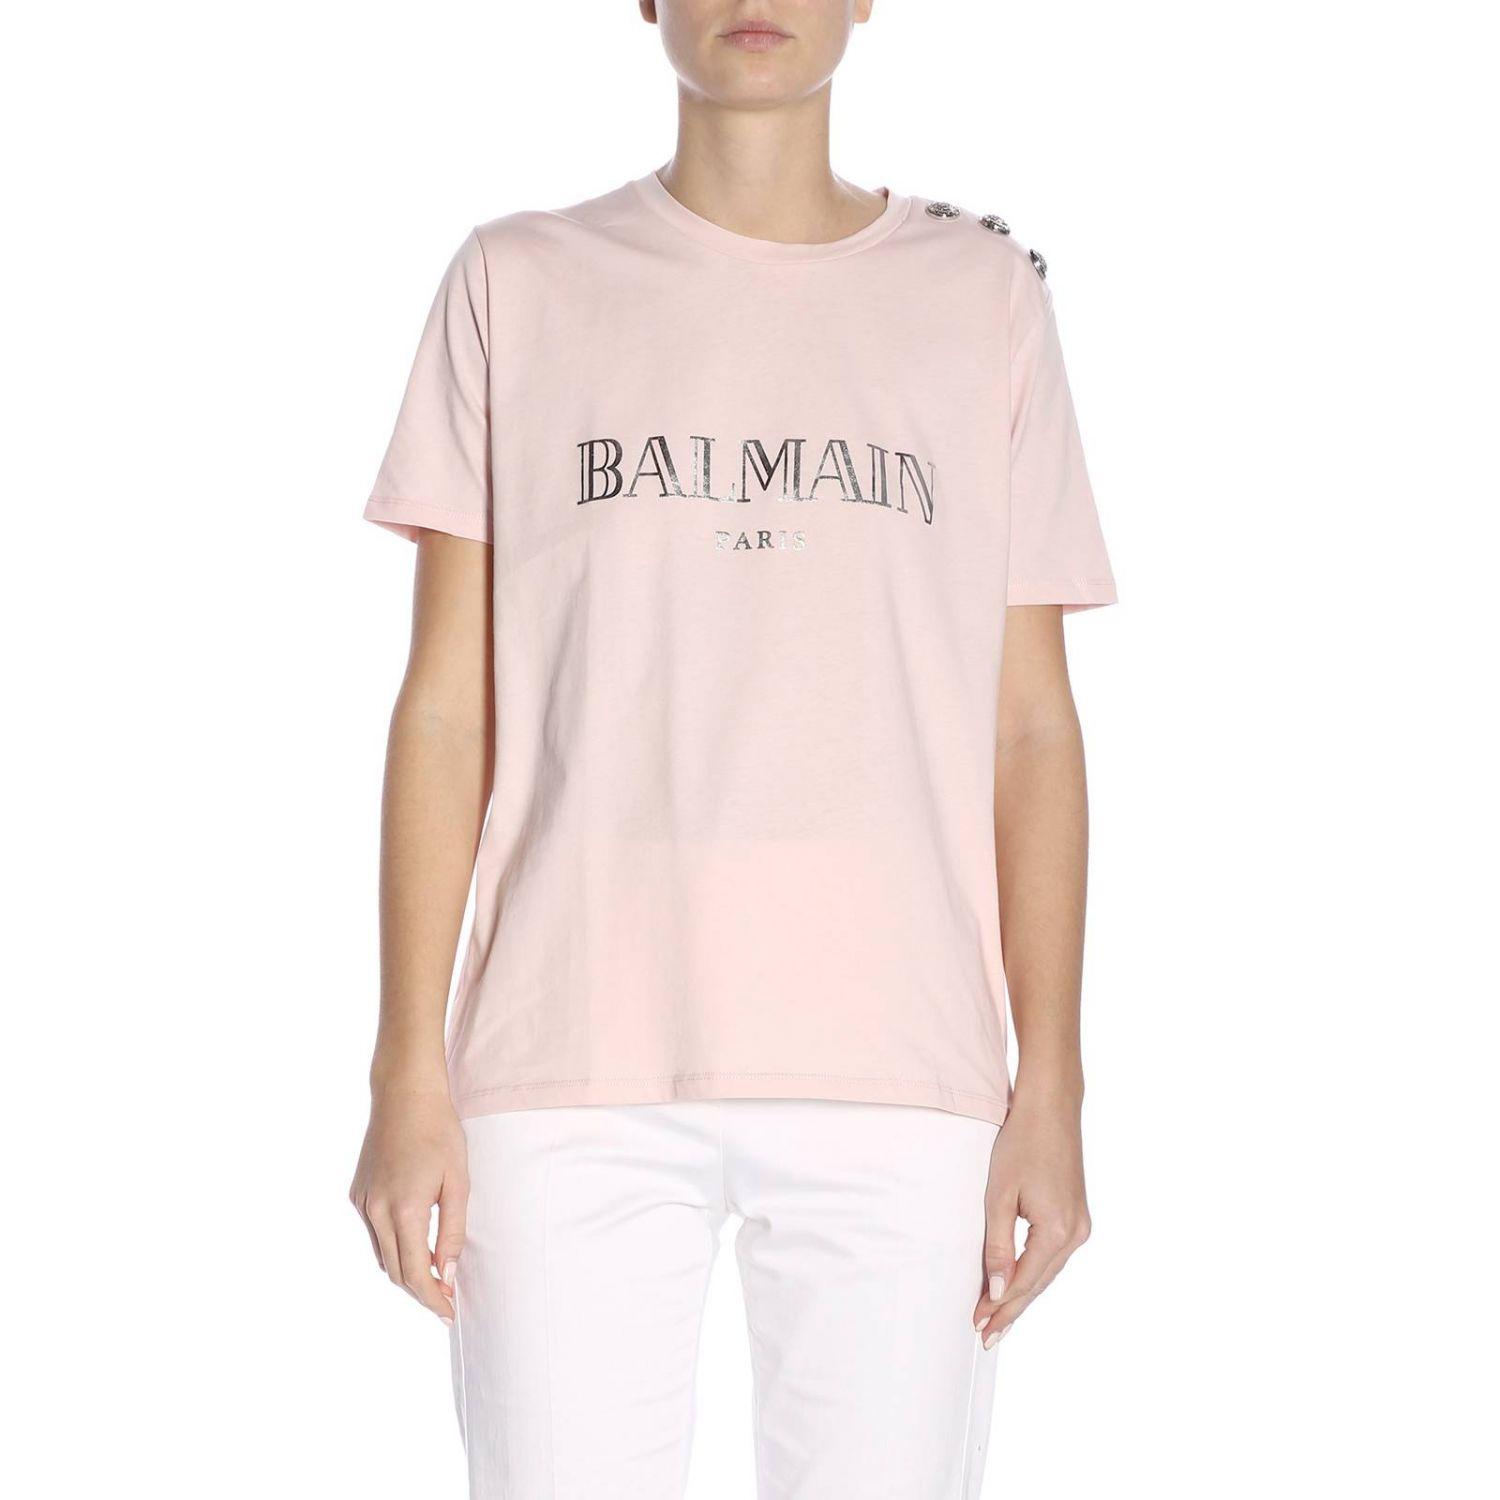 Balmain Cotton Logo T Shirt in Pink - Save 8% - Lyst